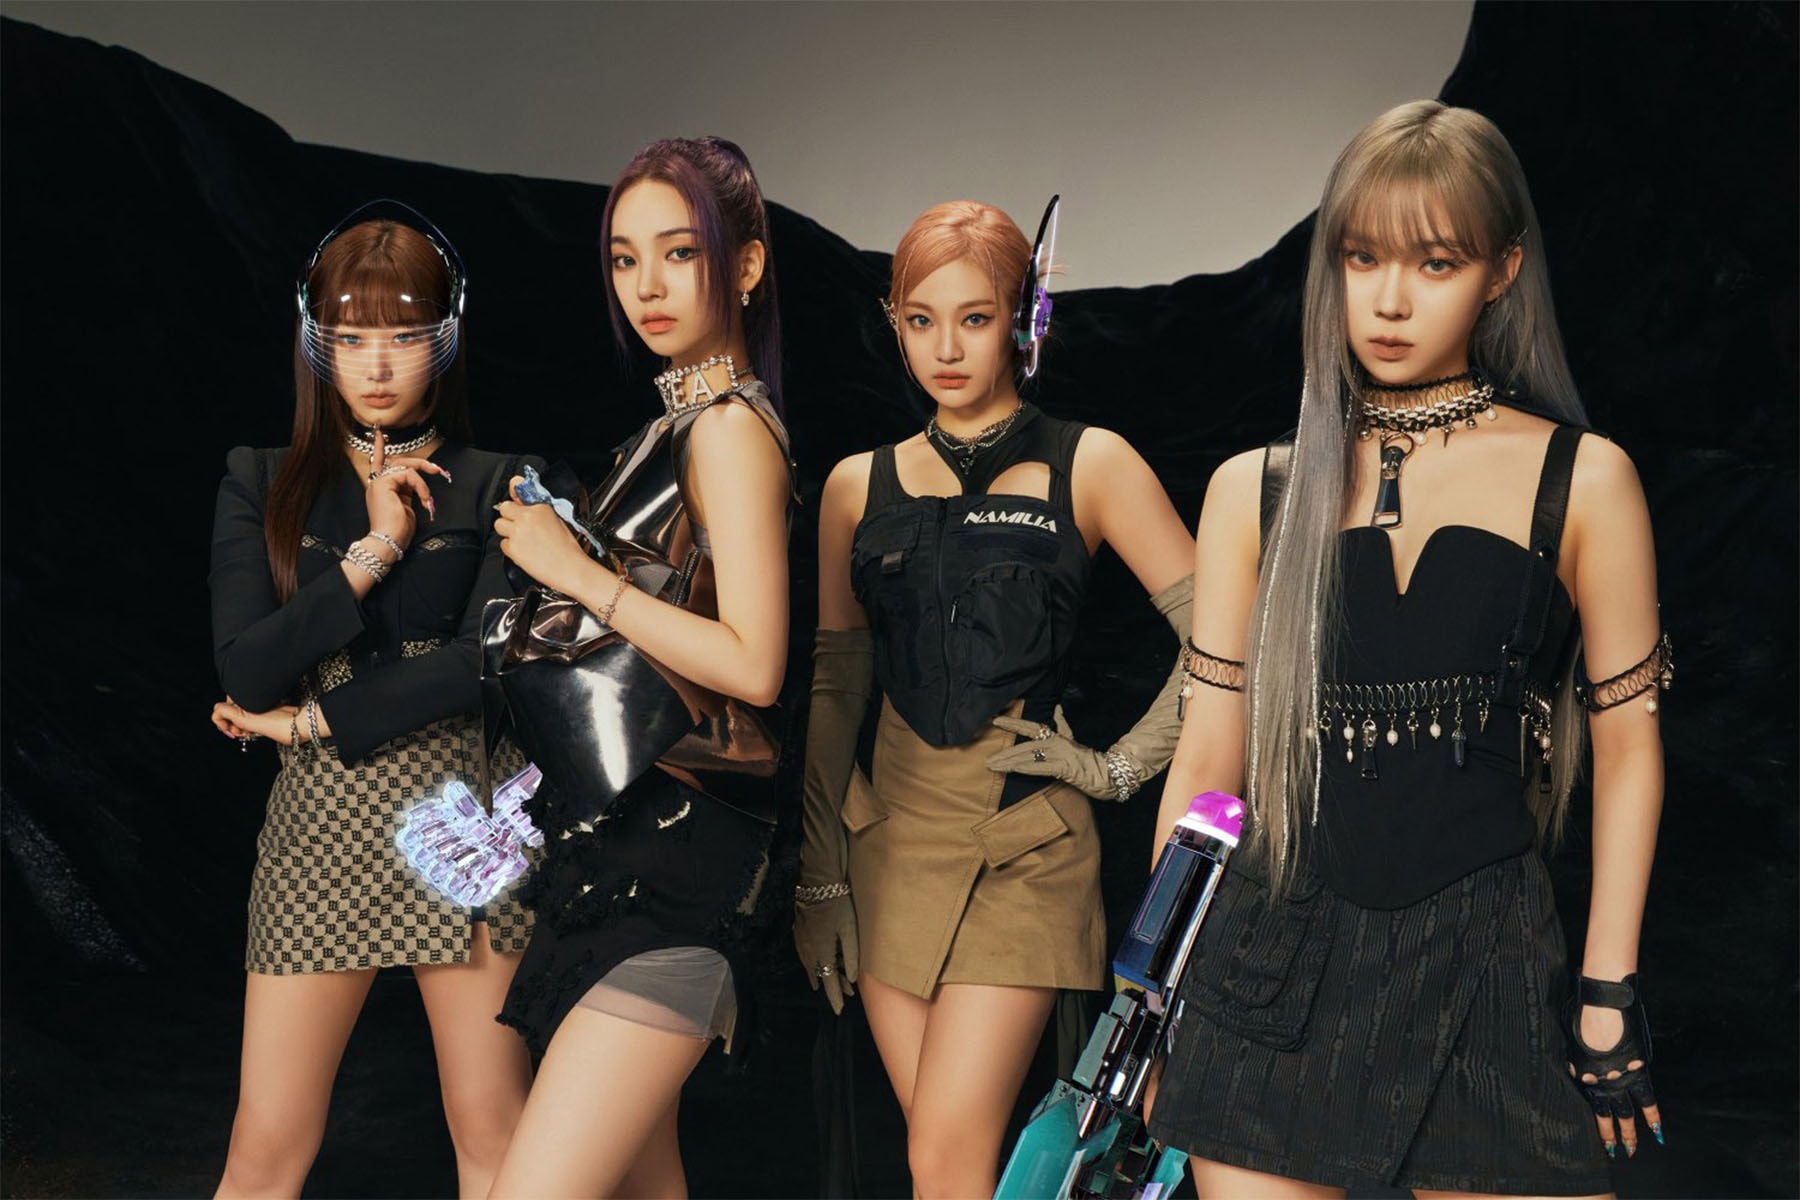 aespa 最新專輯《Girls》銷量突破 161 萬刷新韓國女團最高記錄